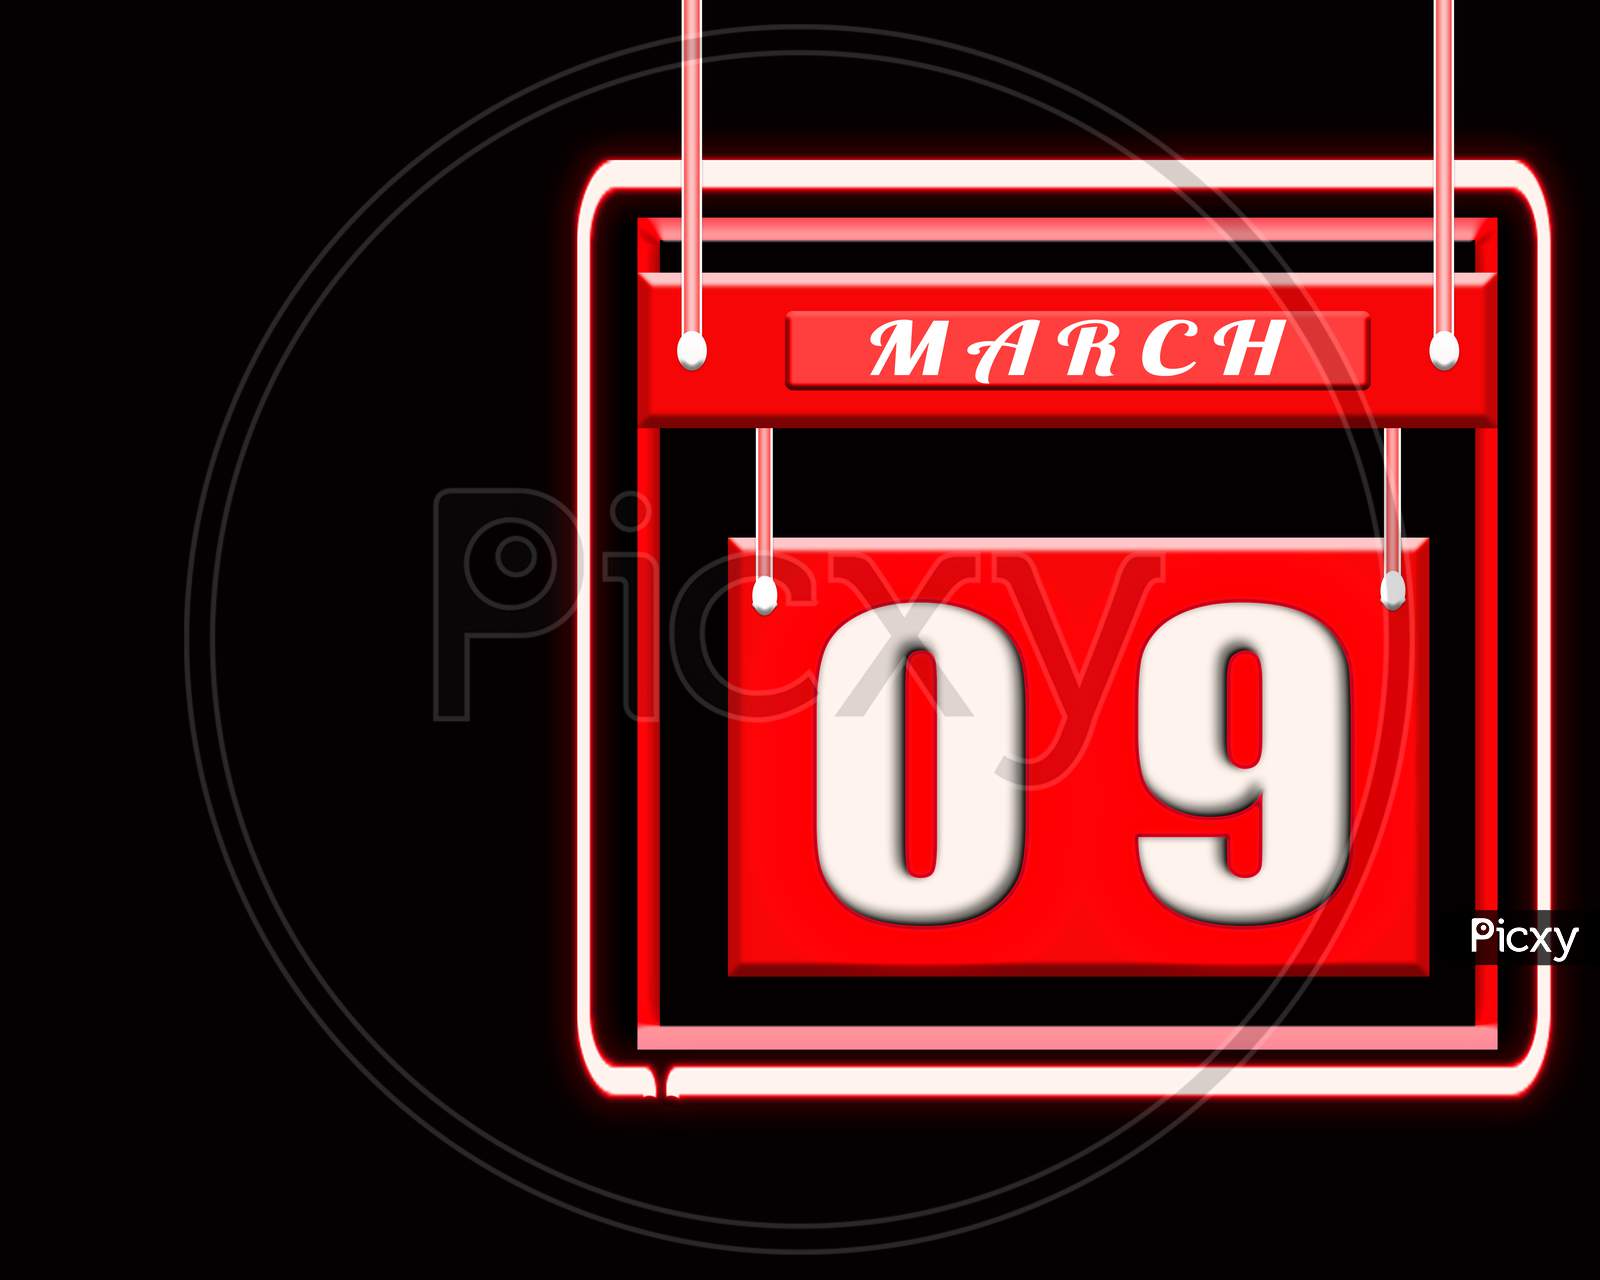 9 March, Red Calendar On Black Backgrand